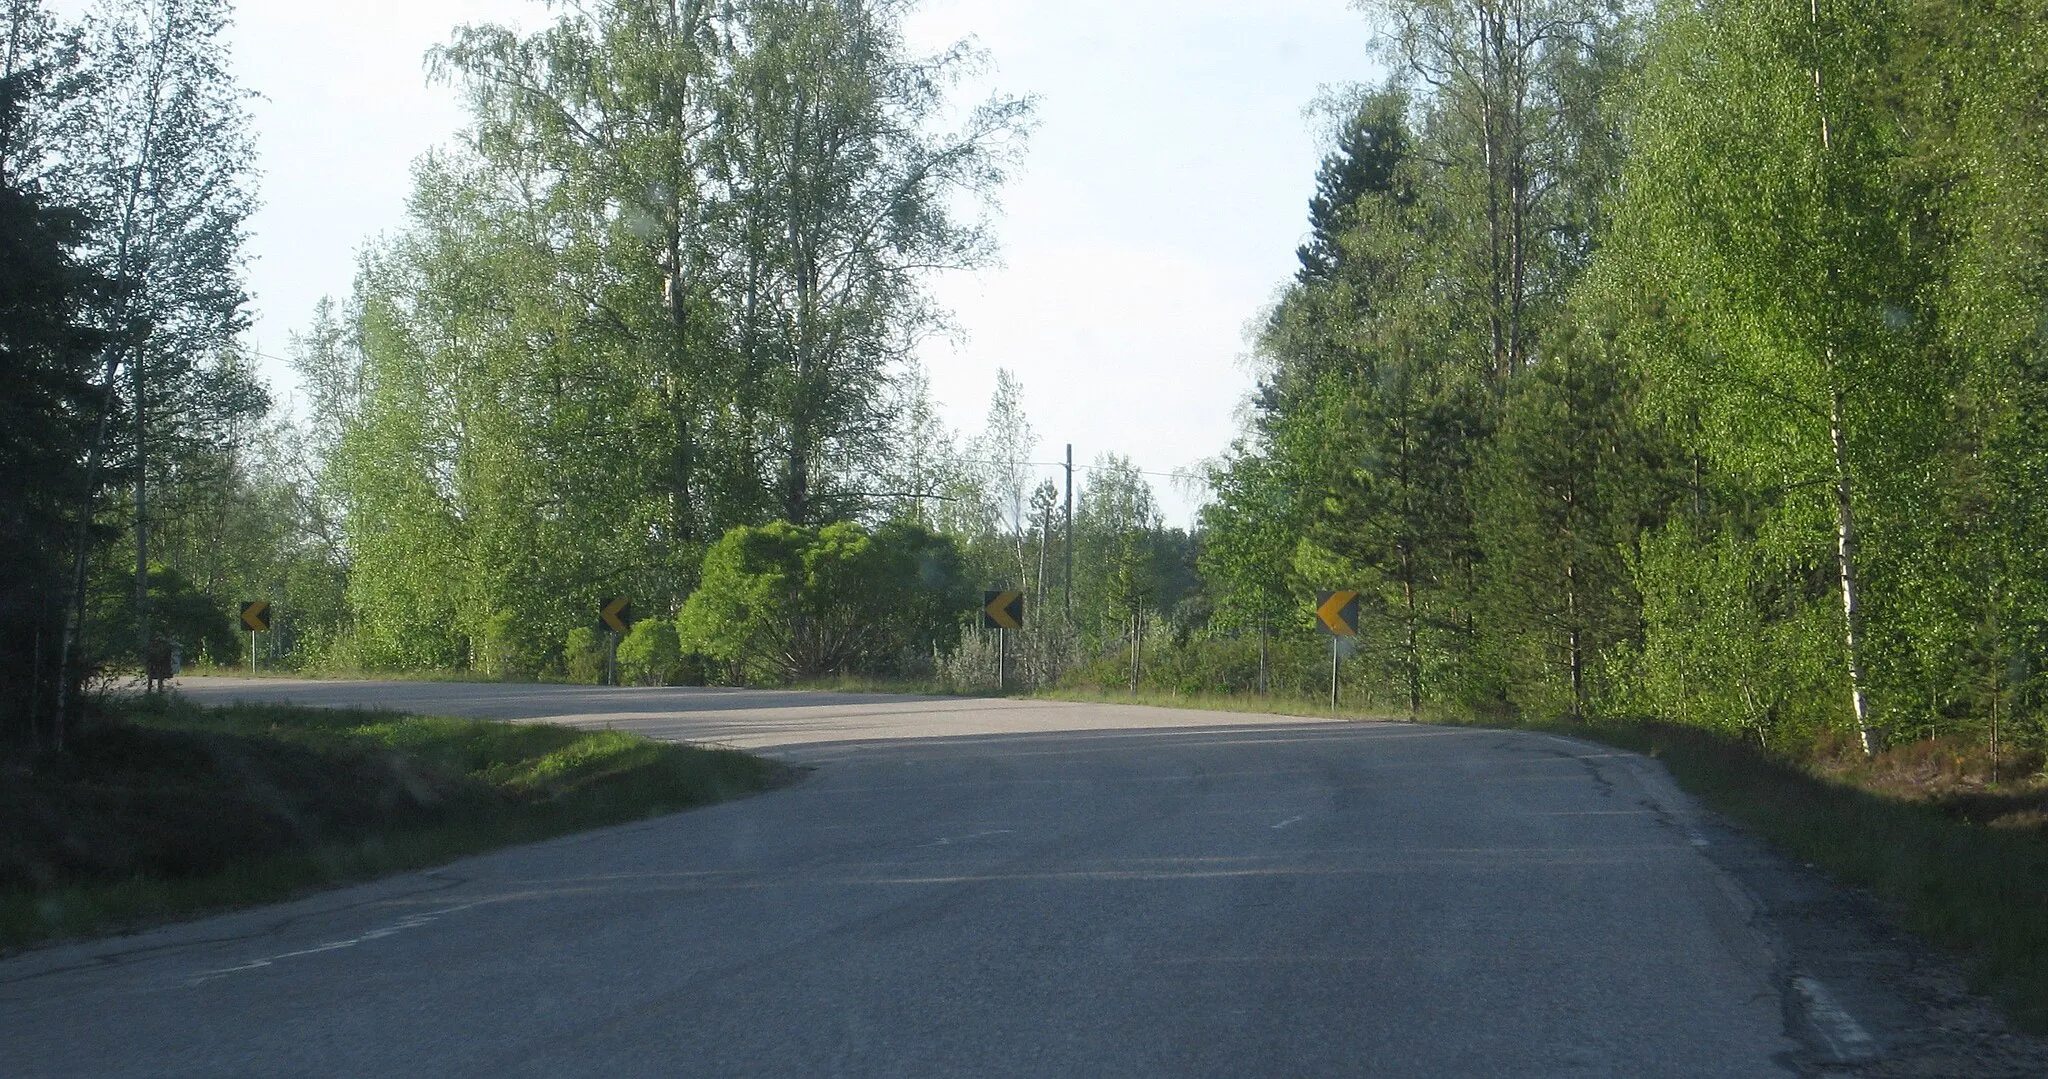 Photo showing: National road 44 in Hyyppä, Kauhajoki, Finland